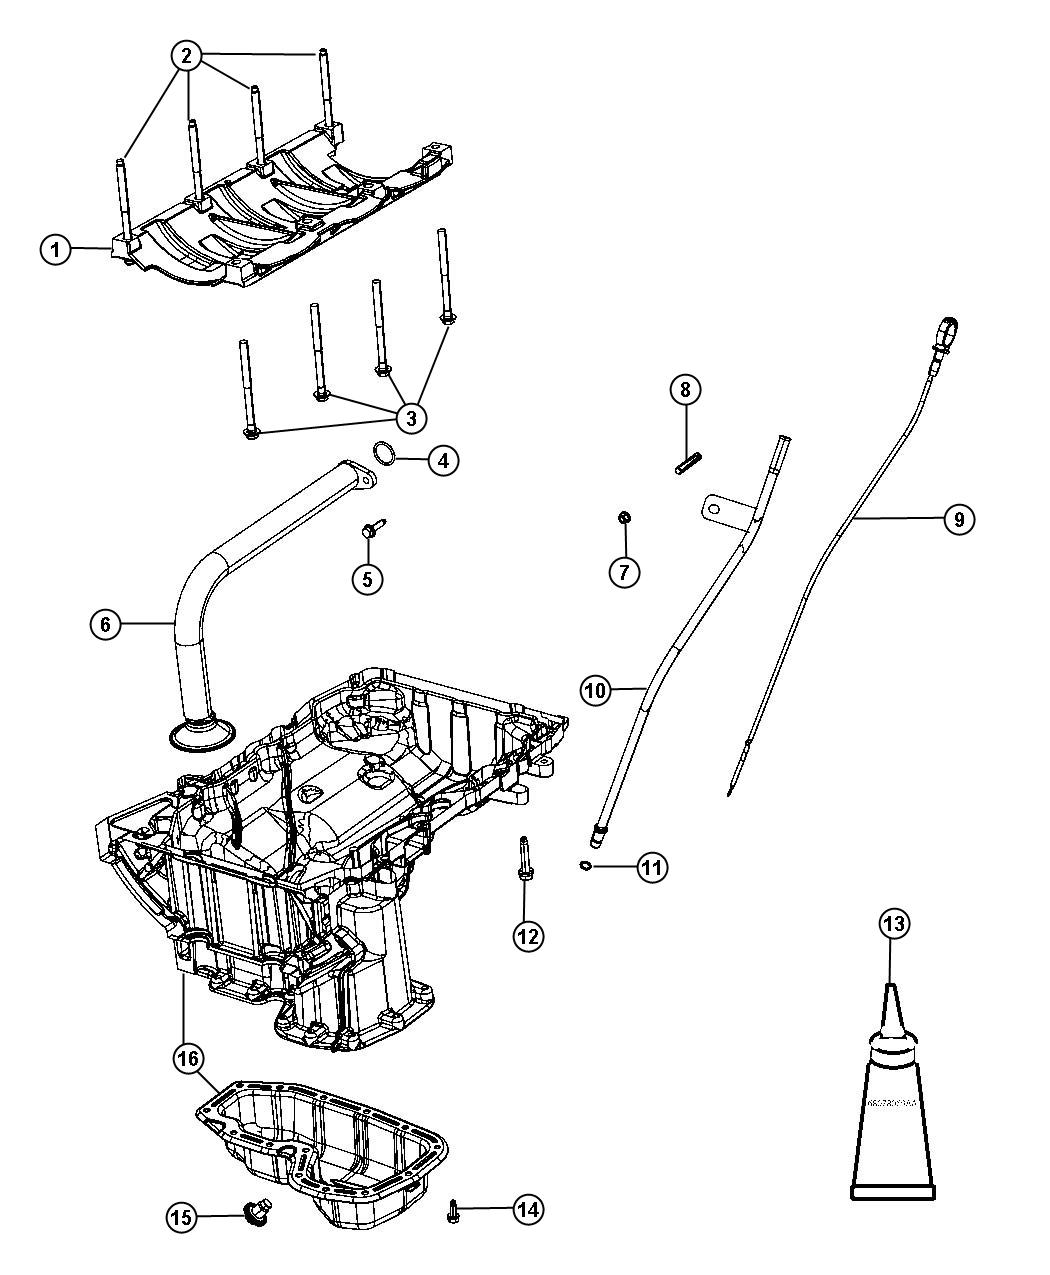 Engine Oil Pan, Engine Oil Level Indicator And Related Parts 3.6L [3.6L V6 VVT Engine]. Diagram